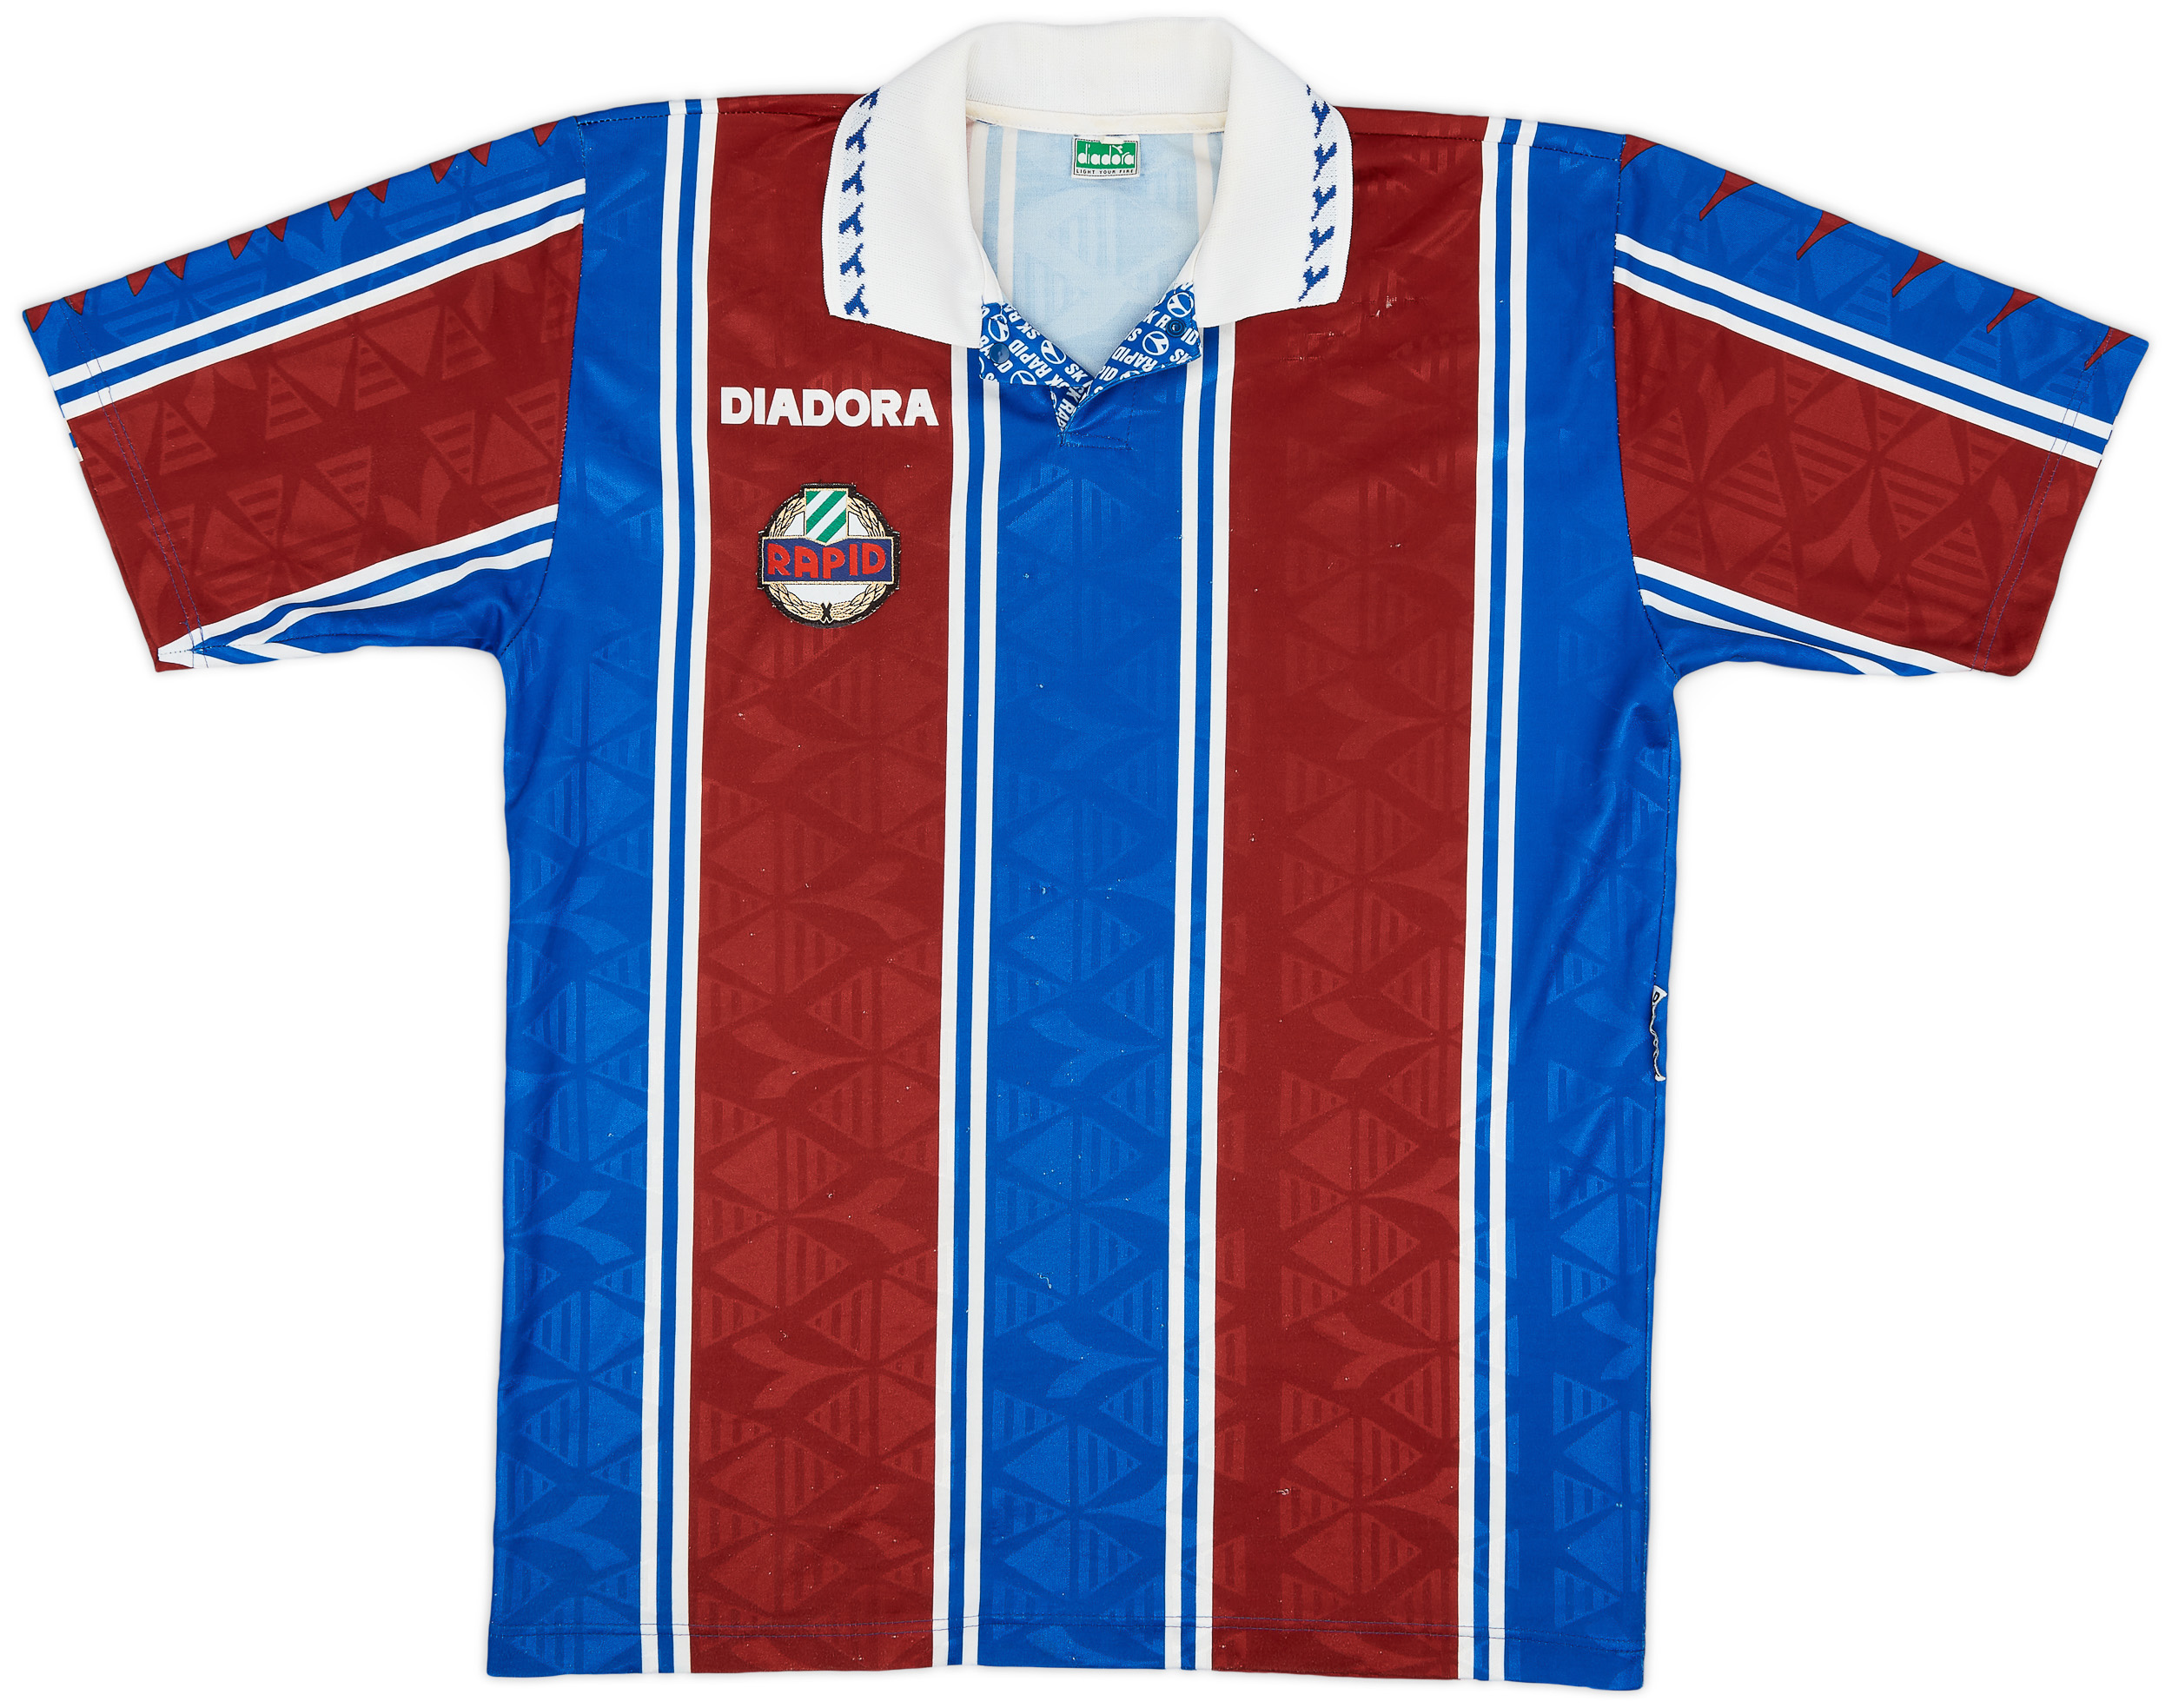 Retro SK Rapid Wien Shirt